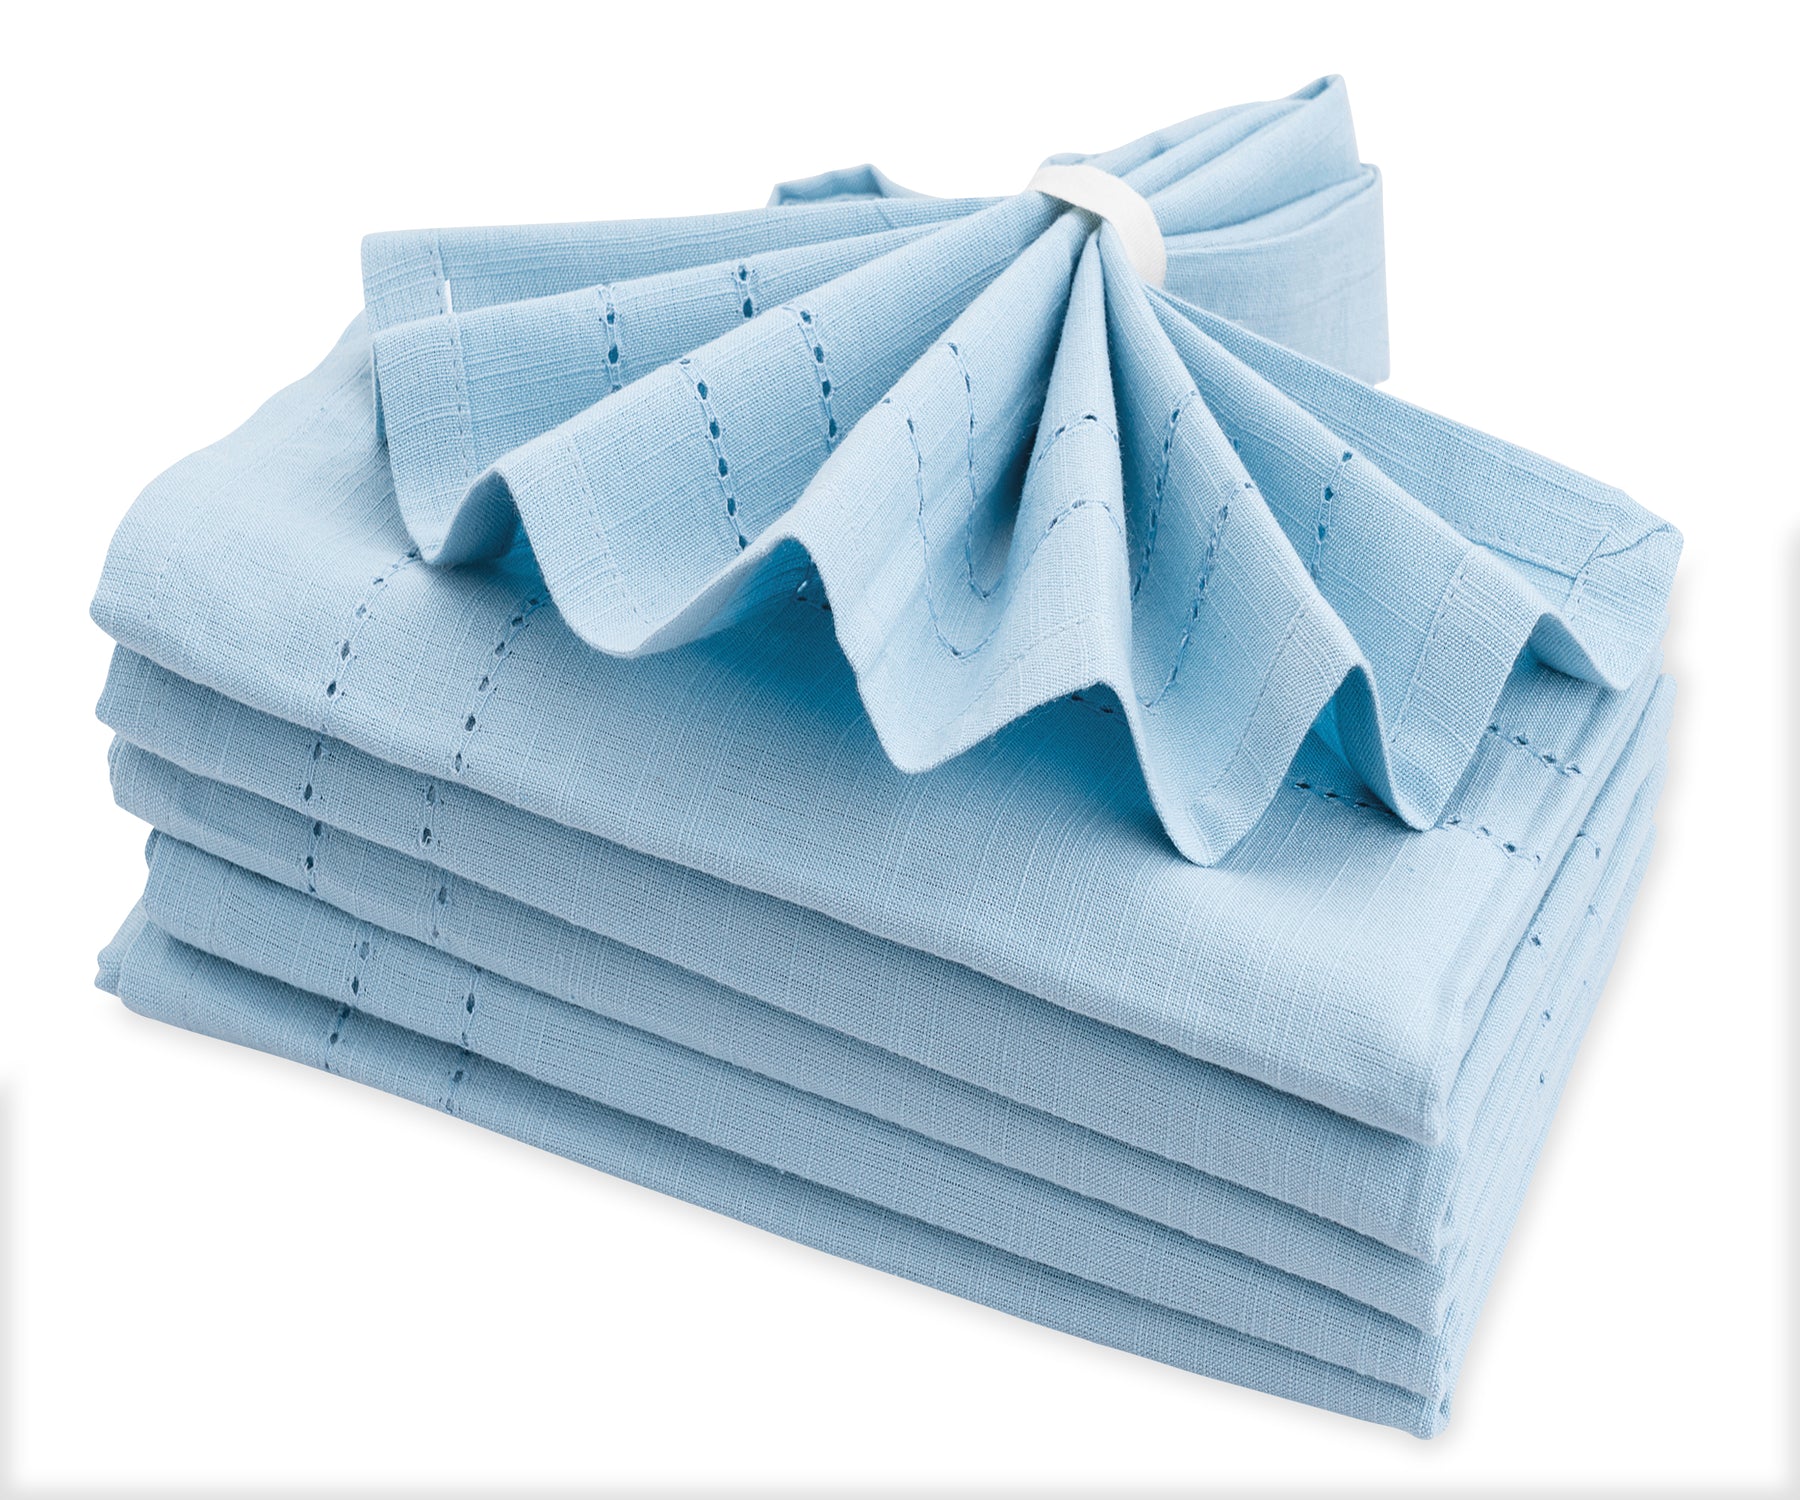 Pile of blue cloth dinner napkins neatly folded